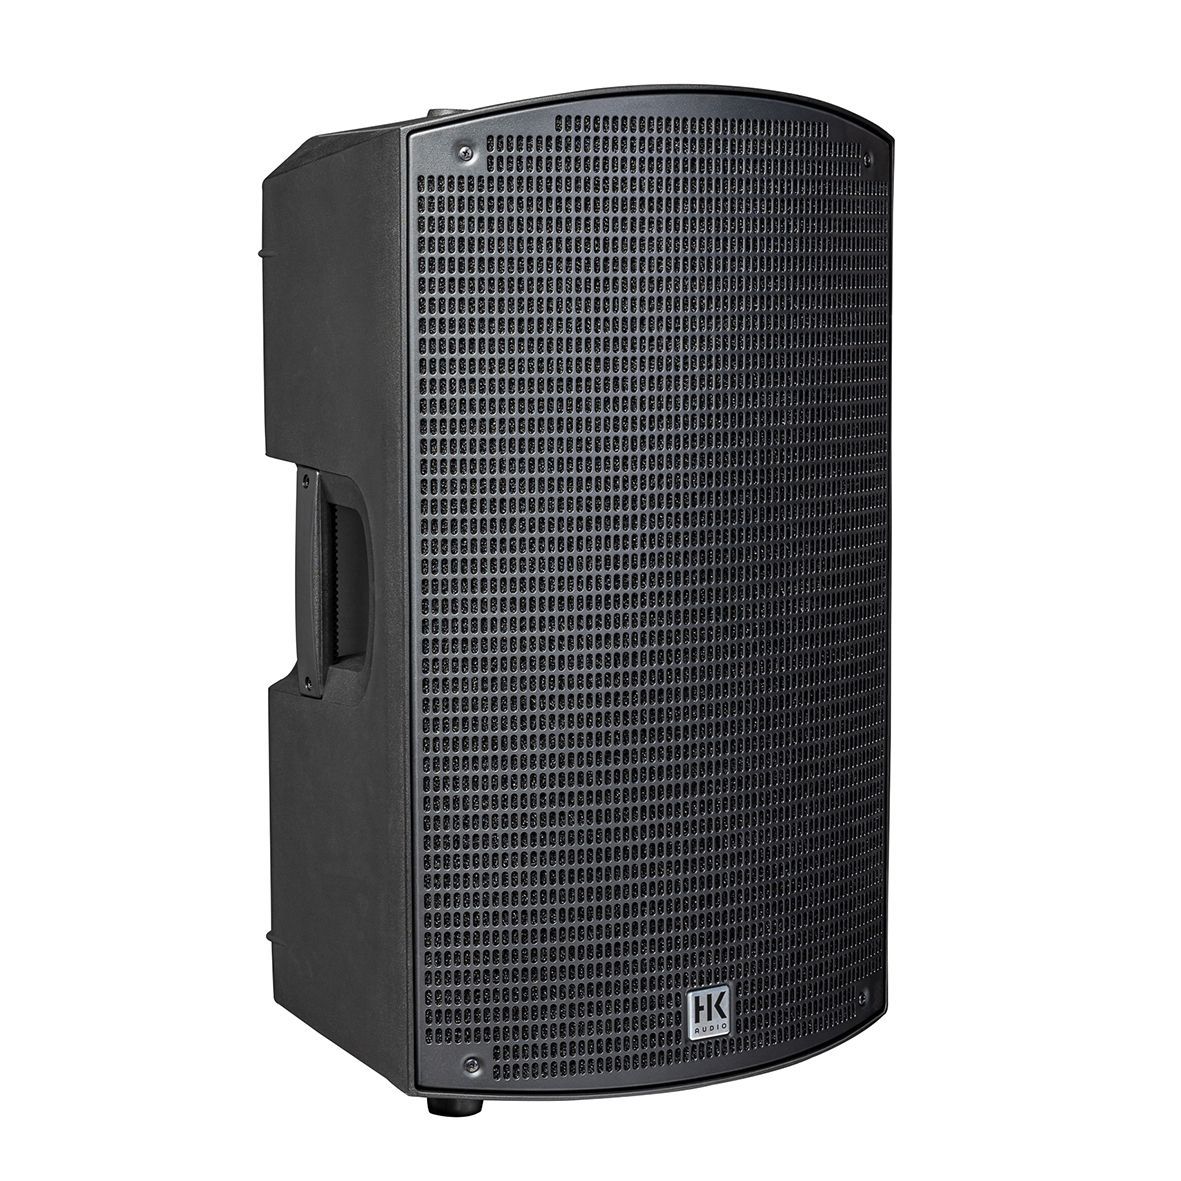 HK Audio Sonar 112 Xi, Aktive PA Box Fullrange Lautsprecherbox mit Bluetooth